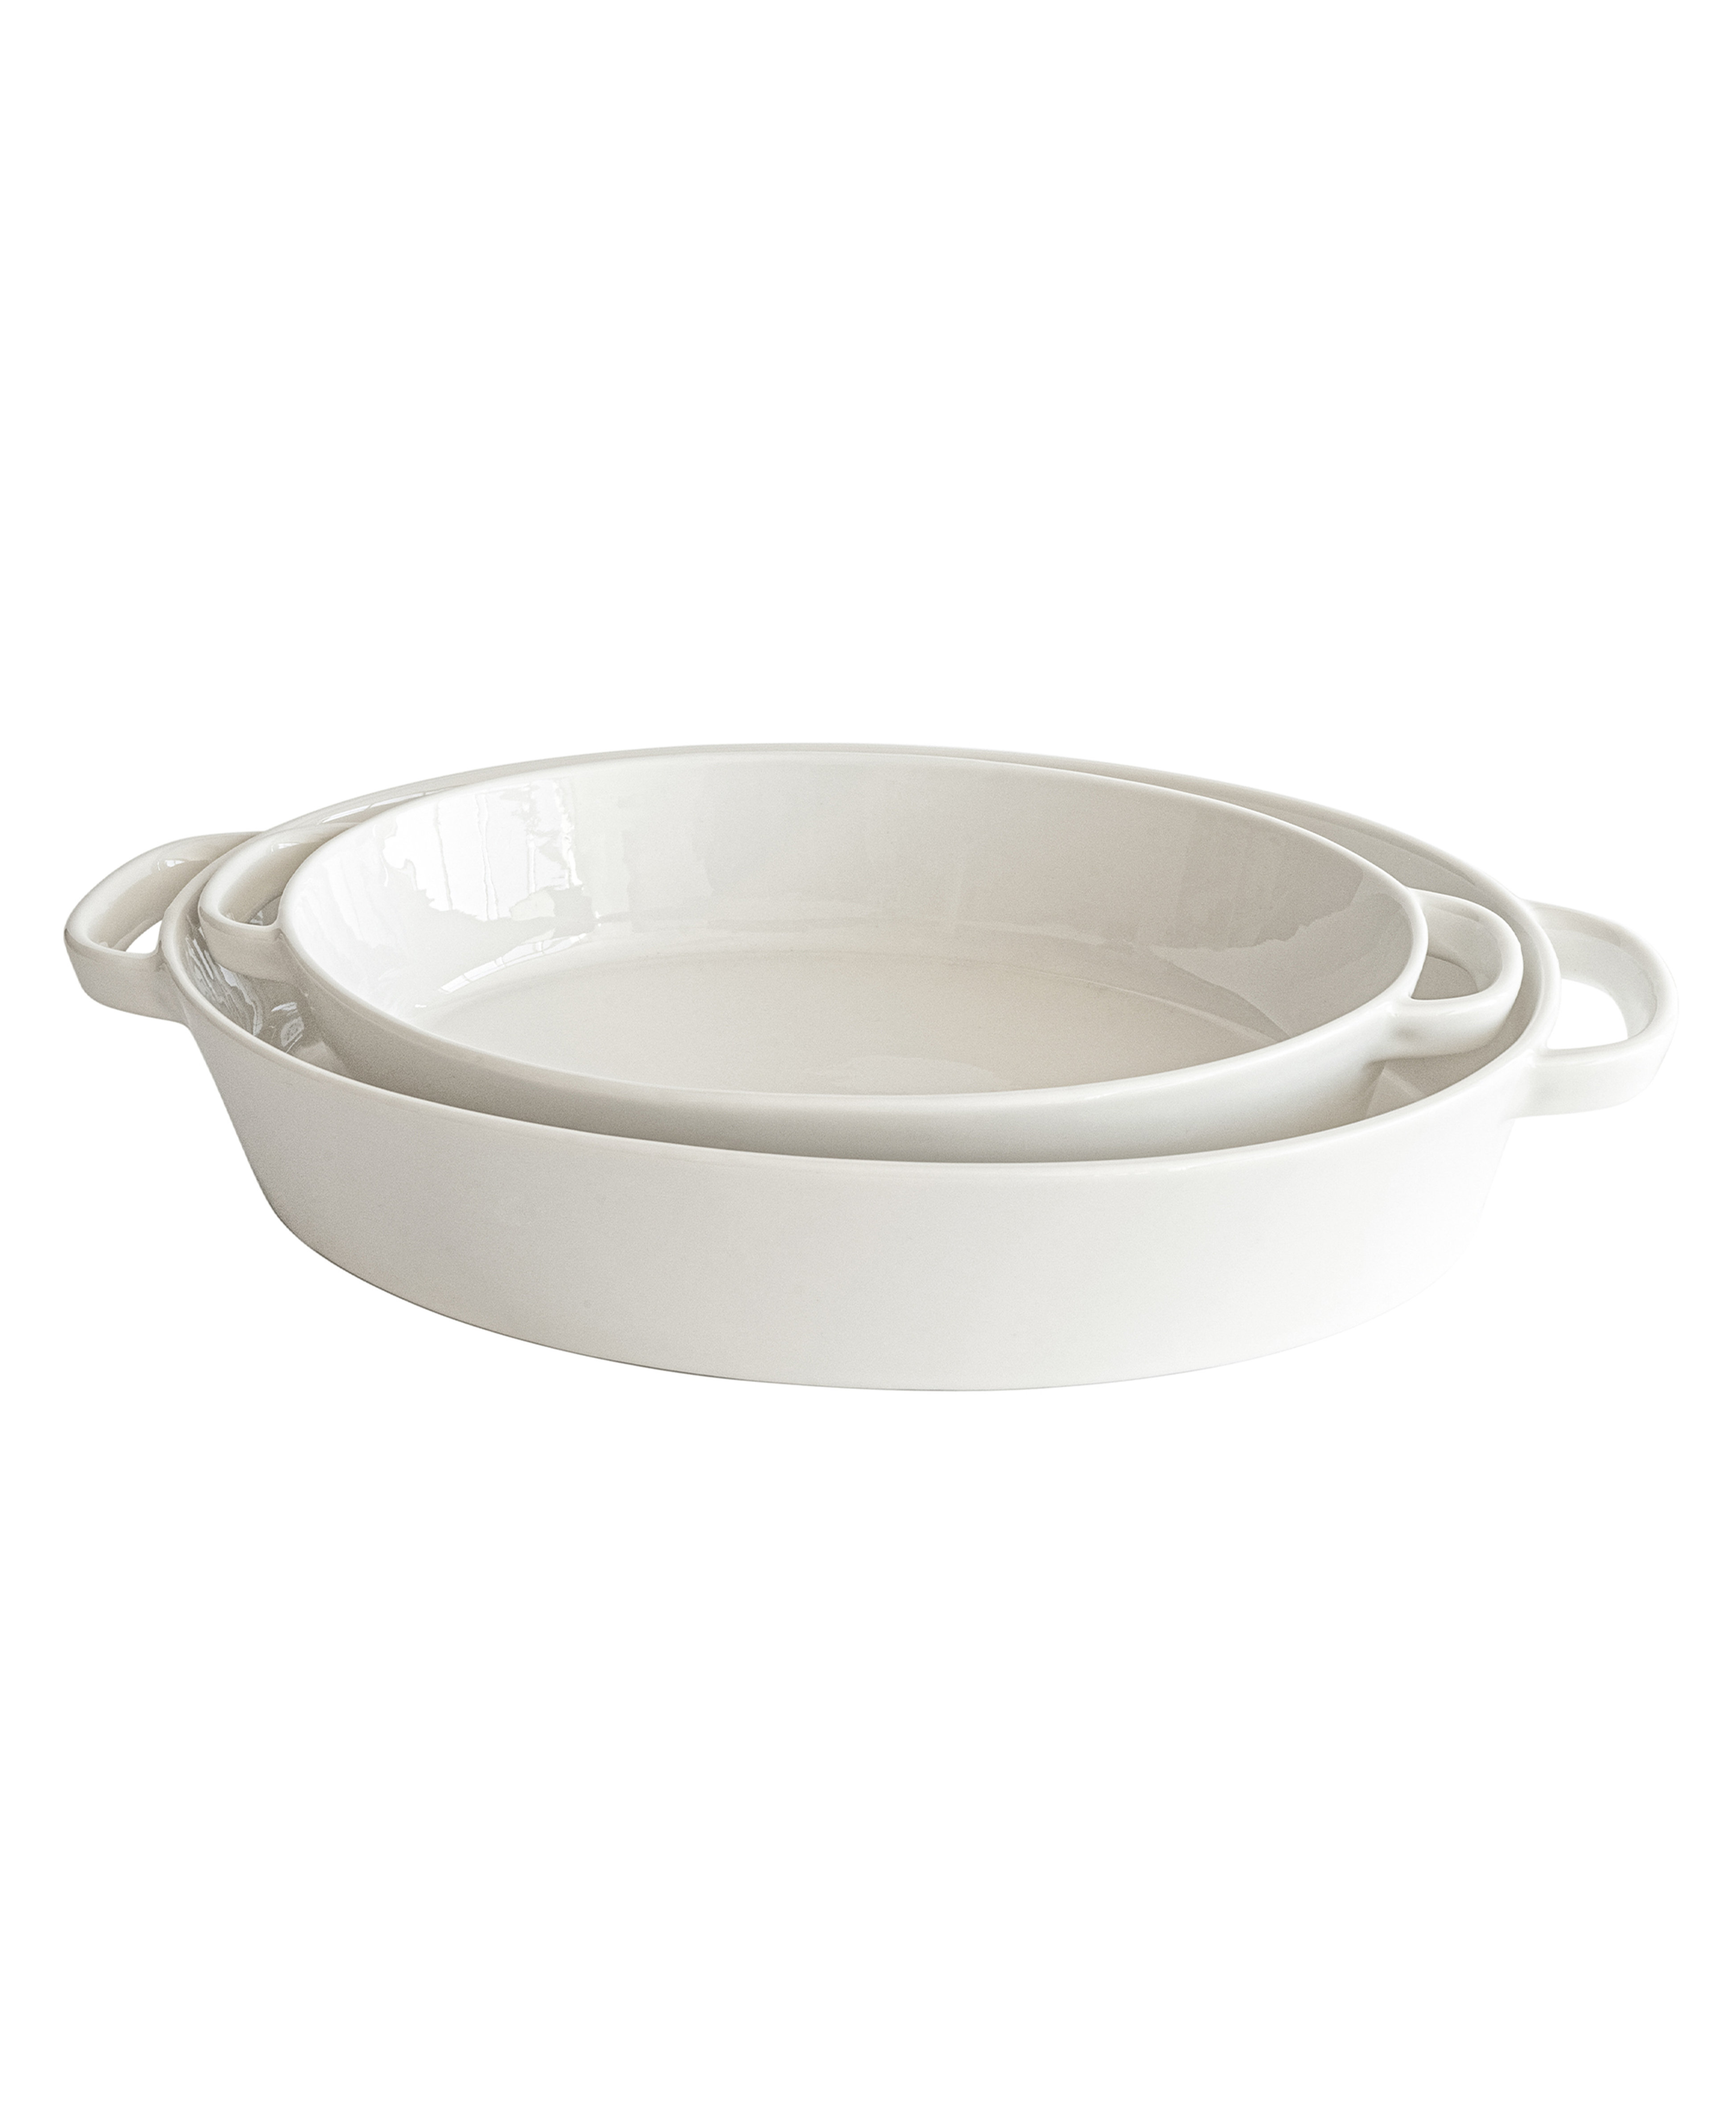 Staub Ceramic 2 Piece Oval Baking Dish Set - White